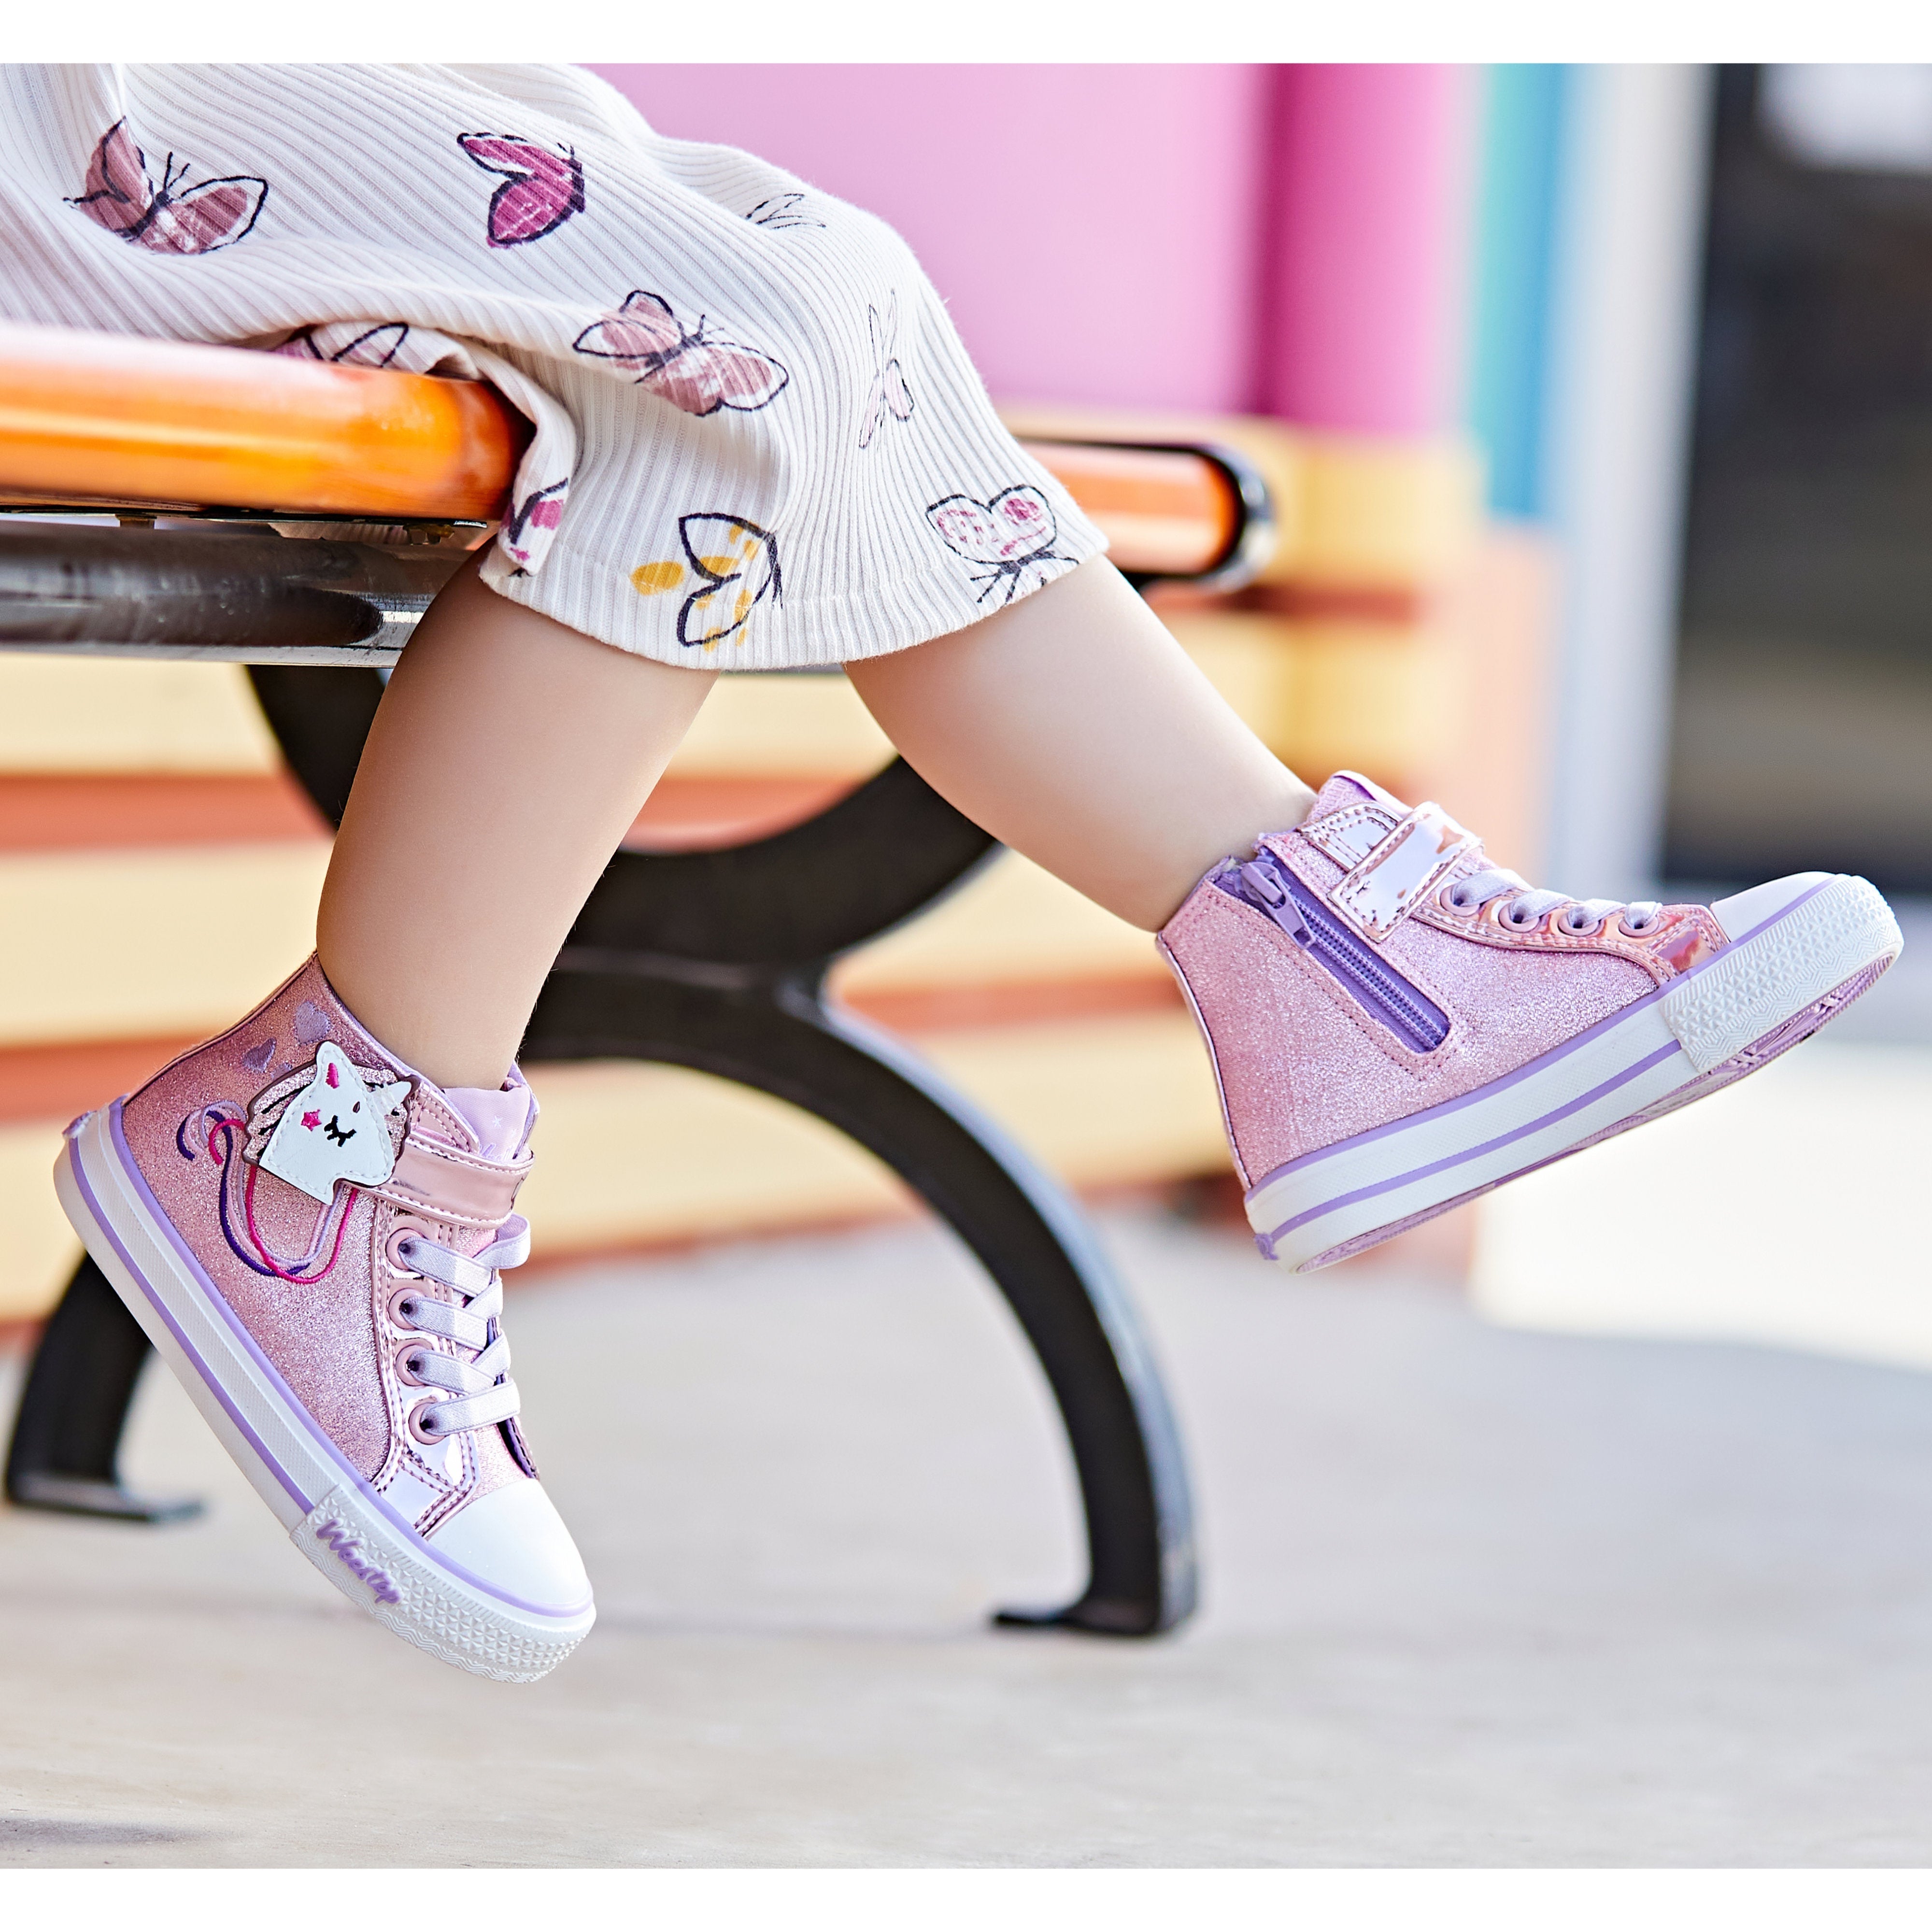 Toddler Little Kid Glitter Unicorn Mid-Top Sneaker